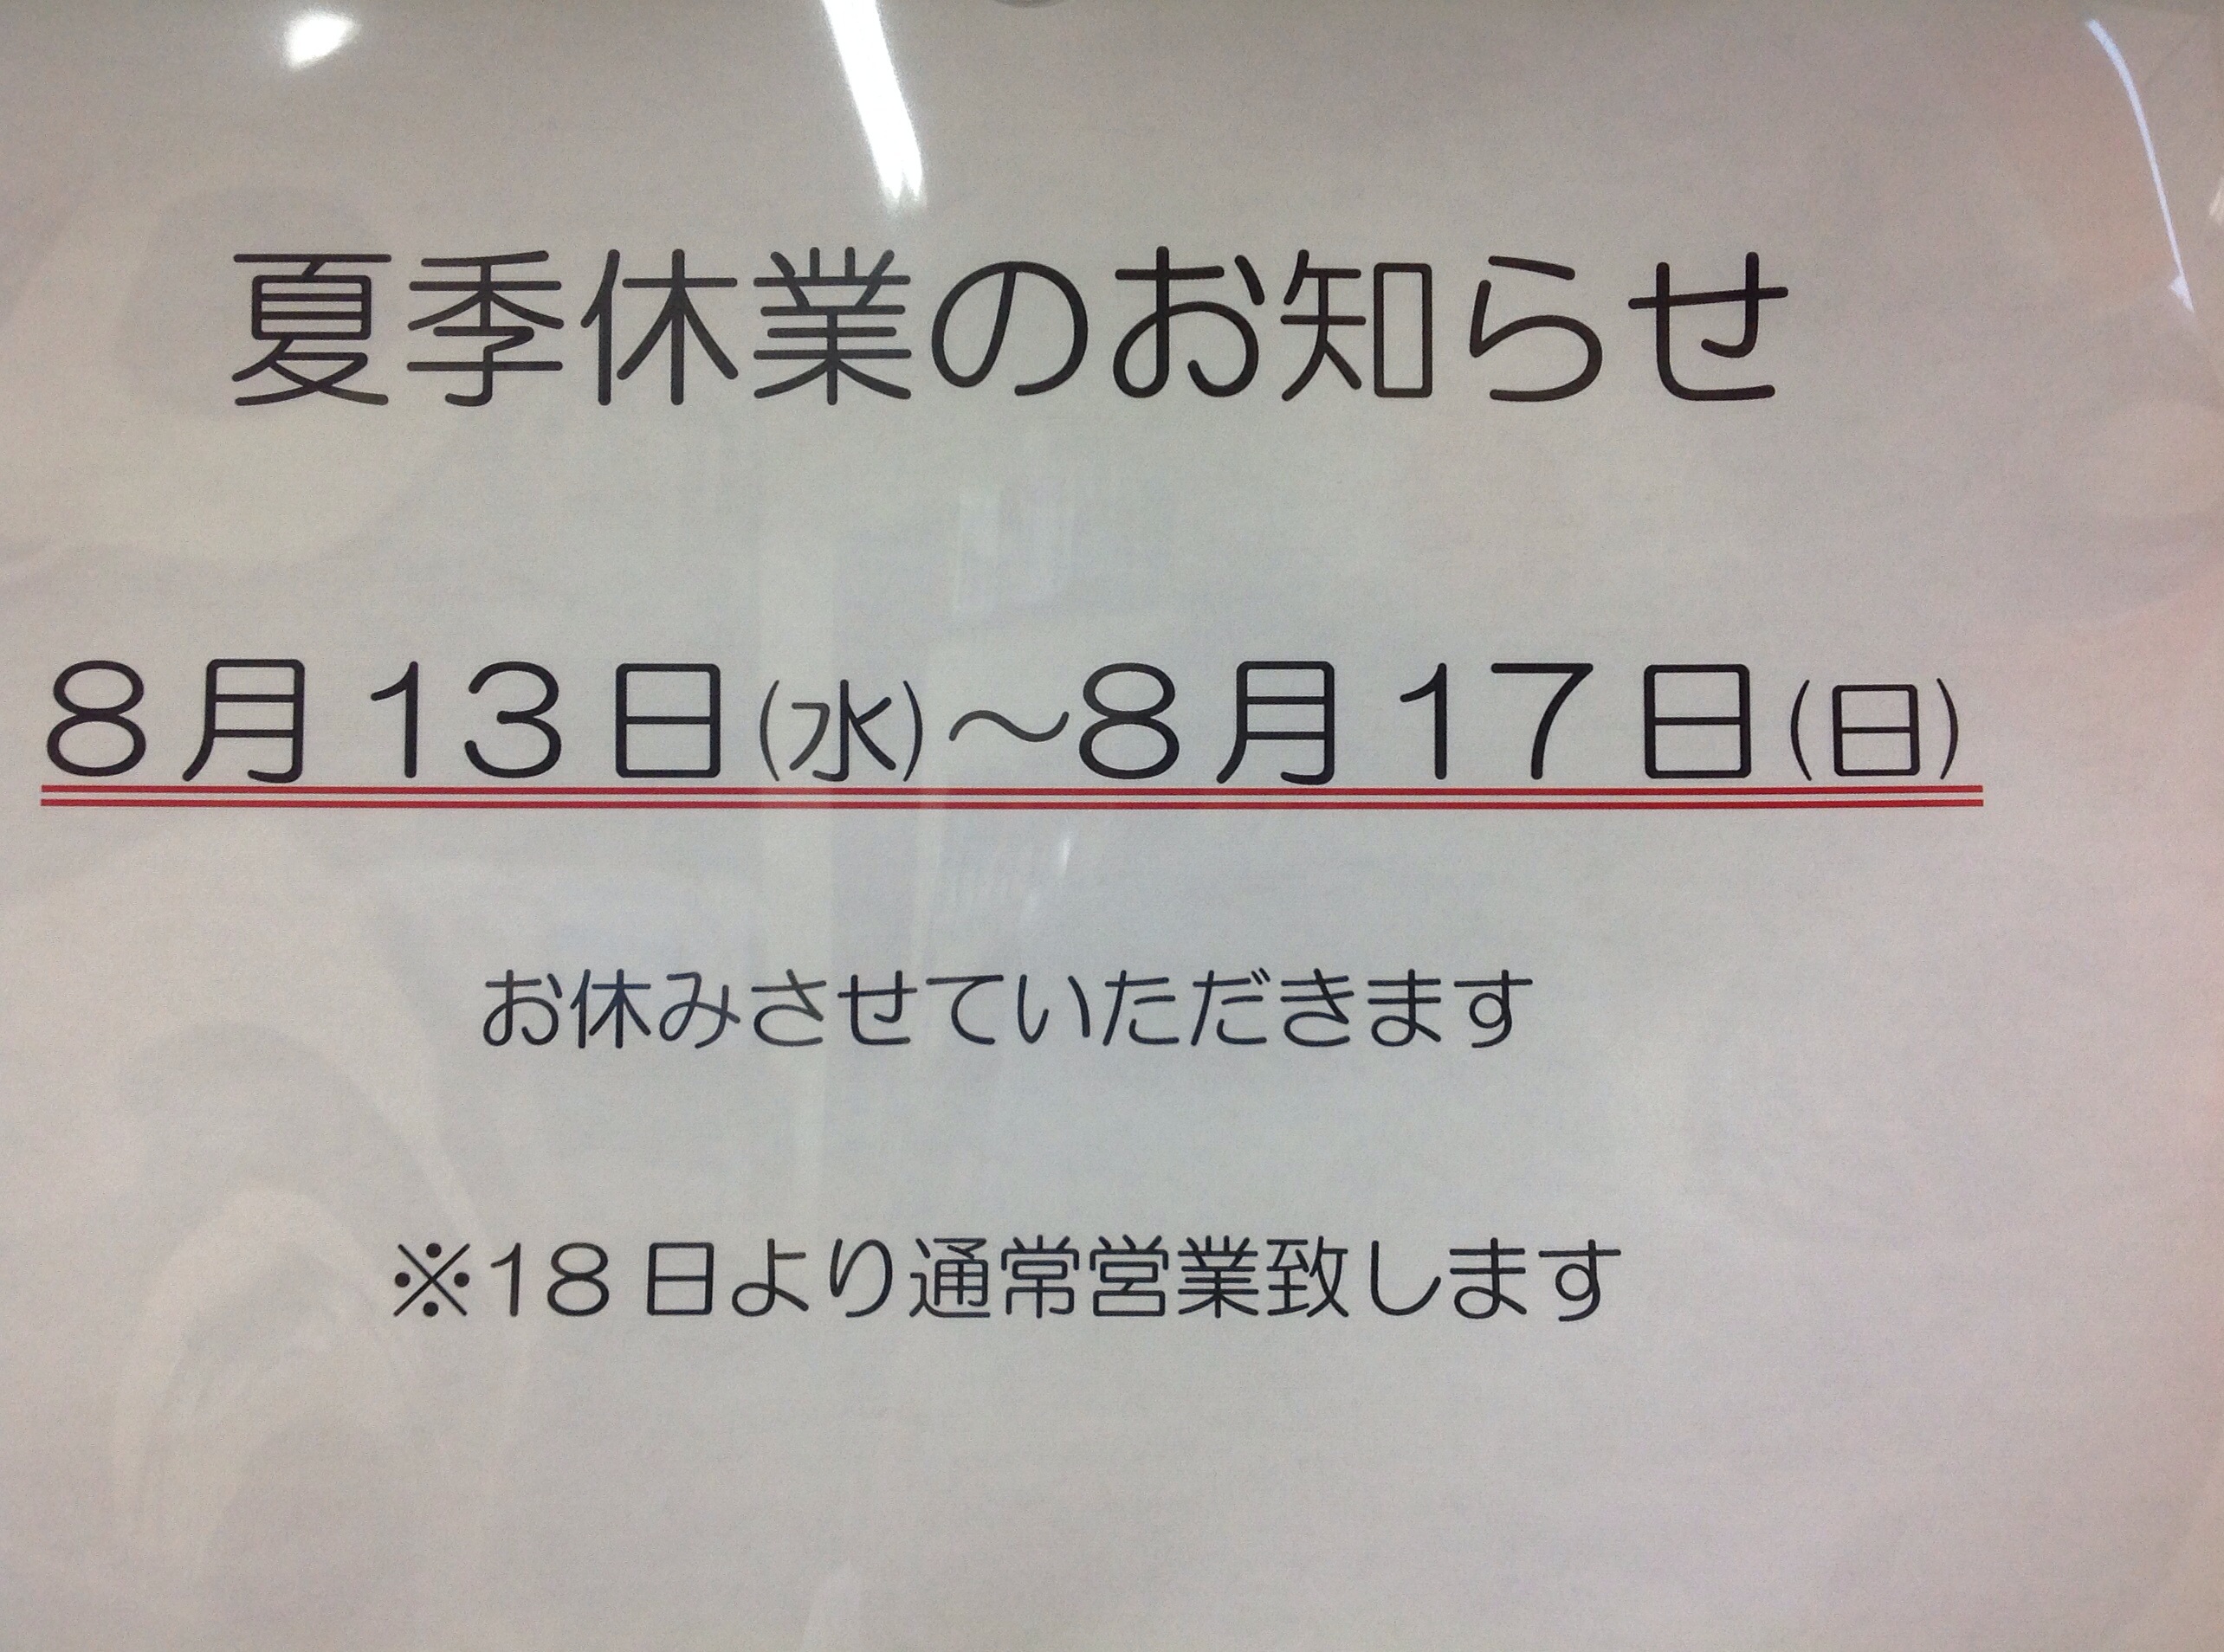 http://www.root-ex.co.jp/jumonji/2014/08/12/1/image.jpg